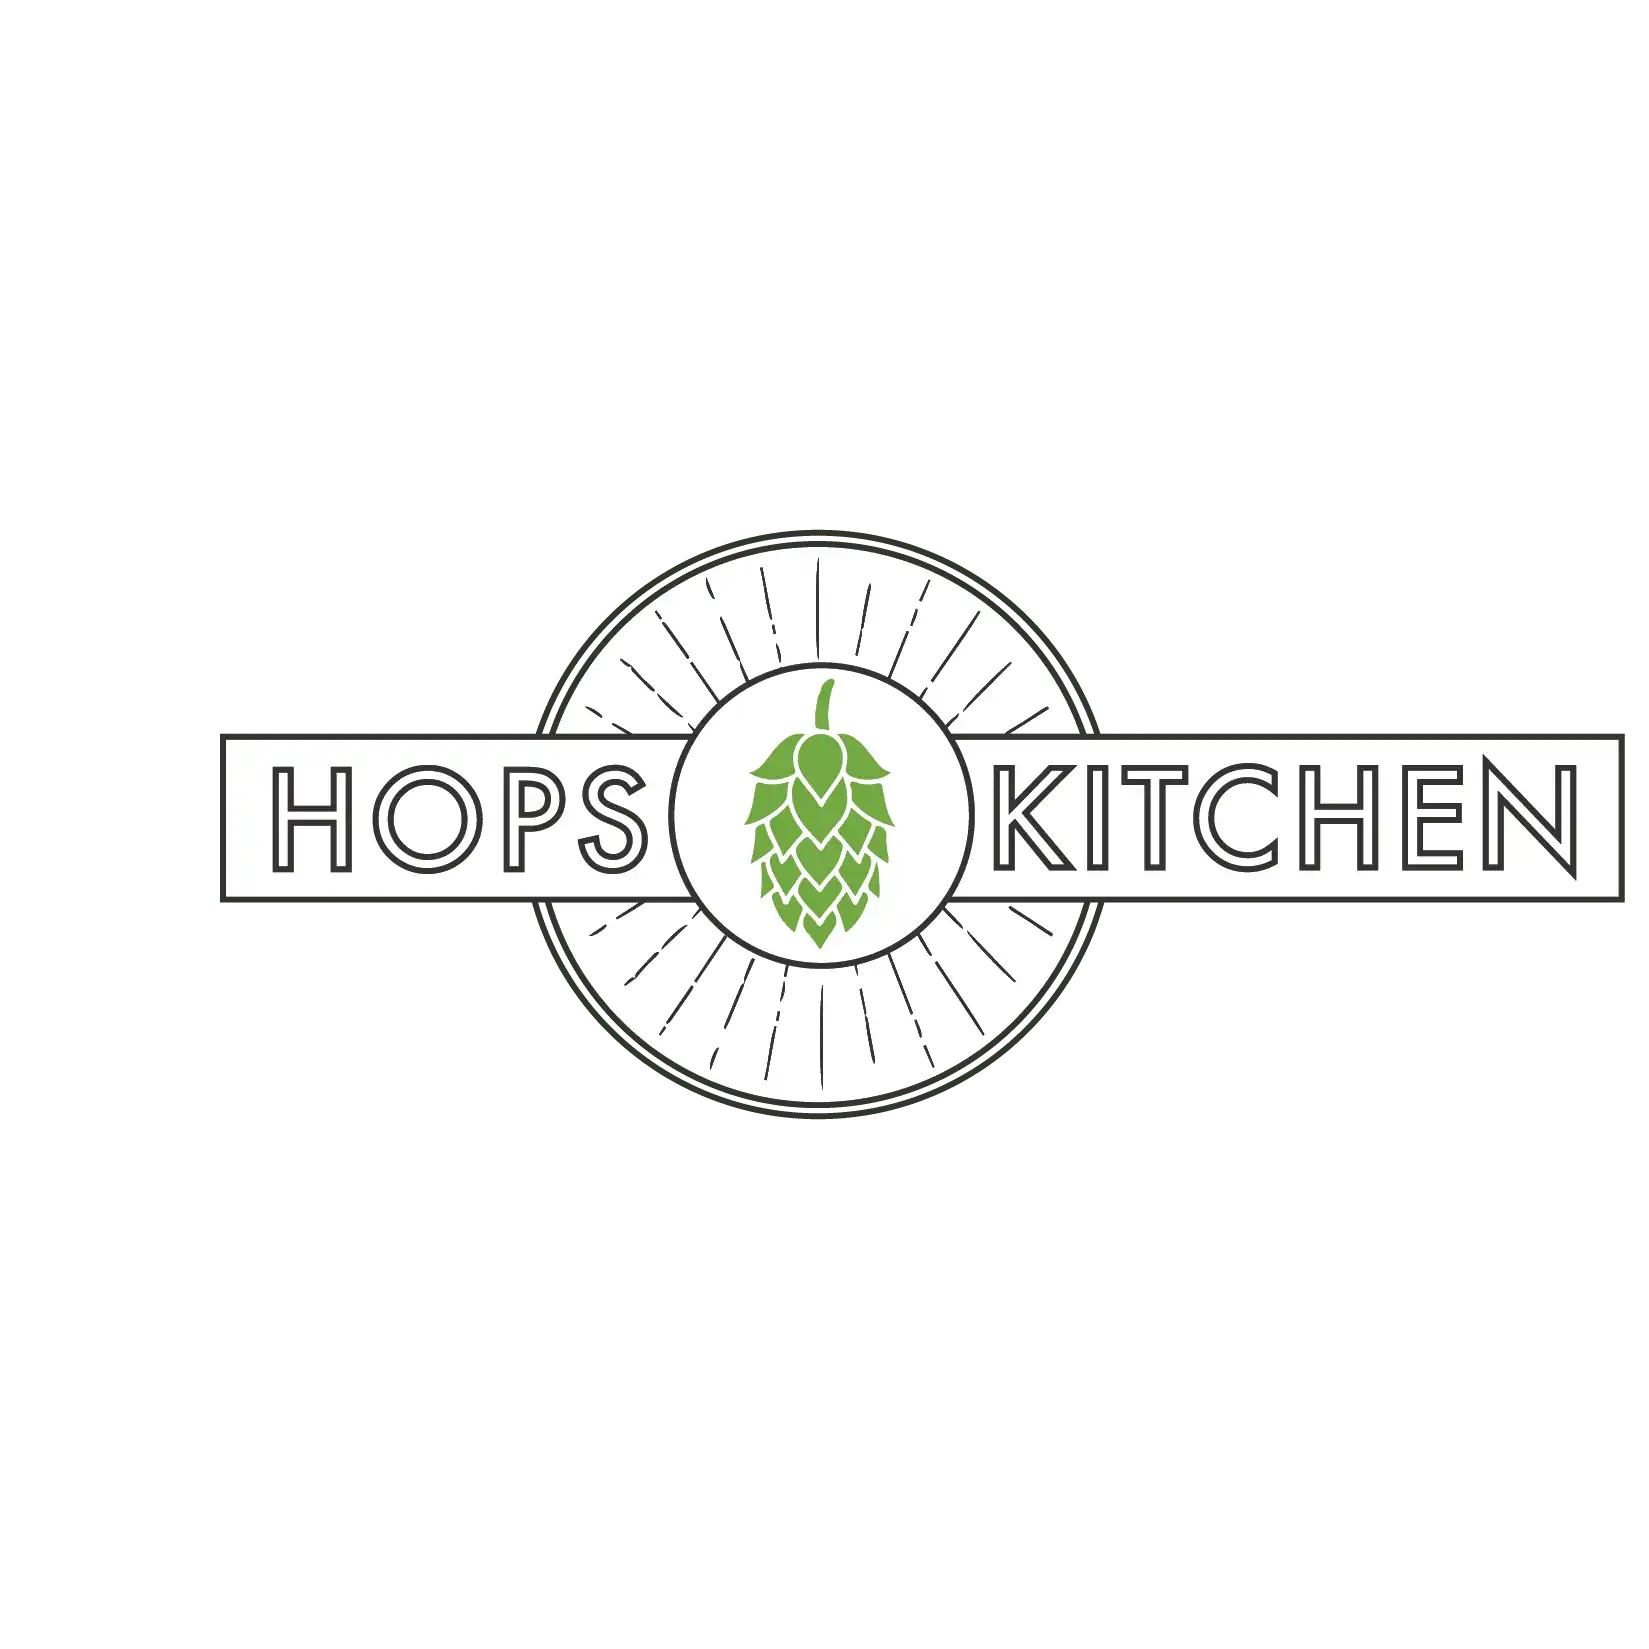 Hops Kitchen logo